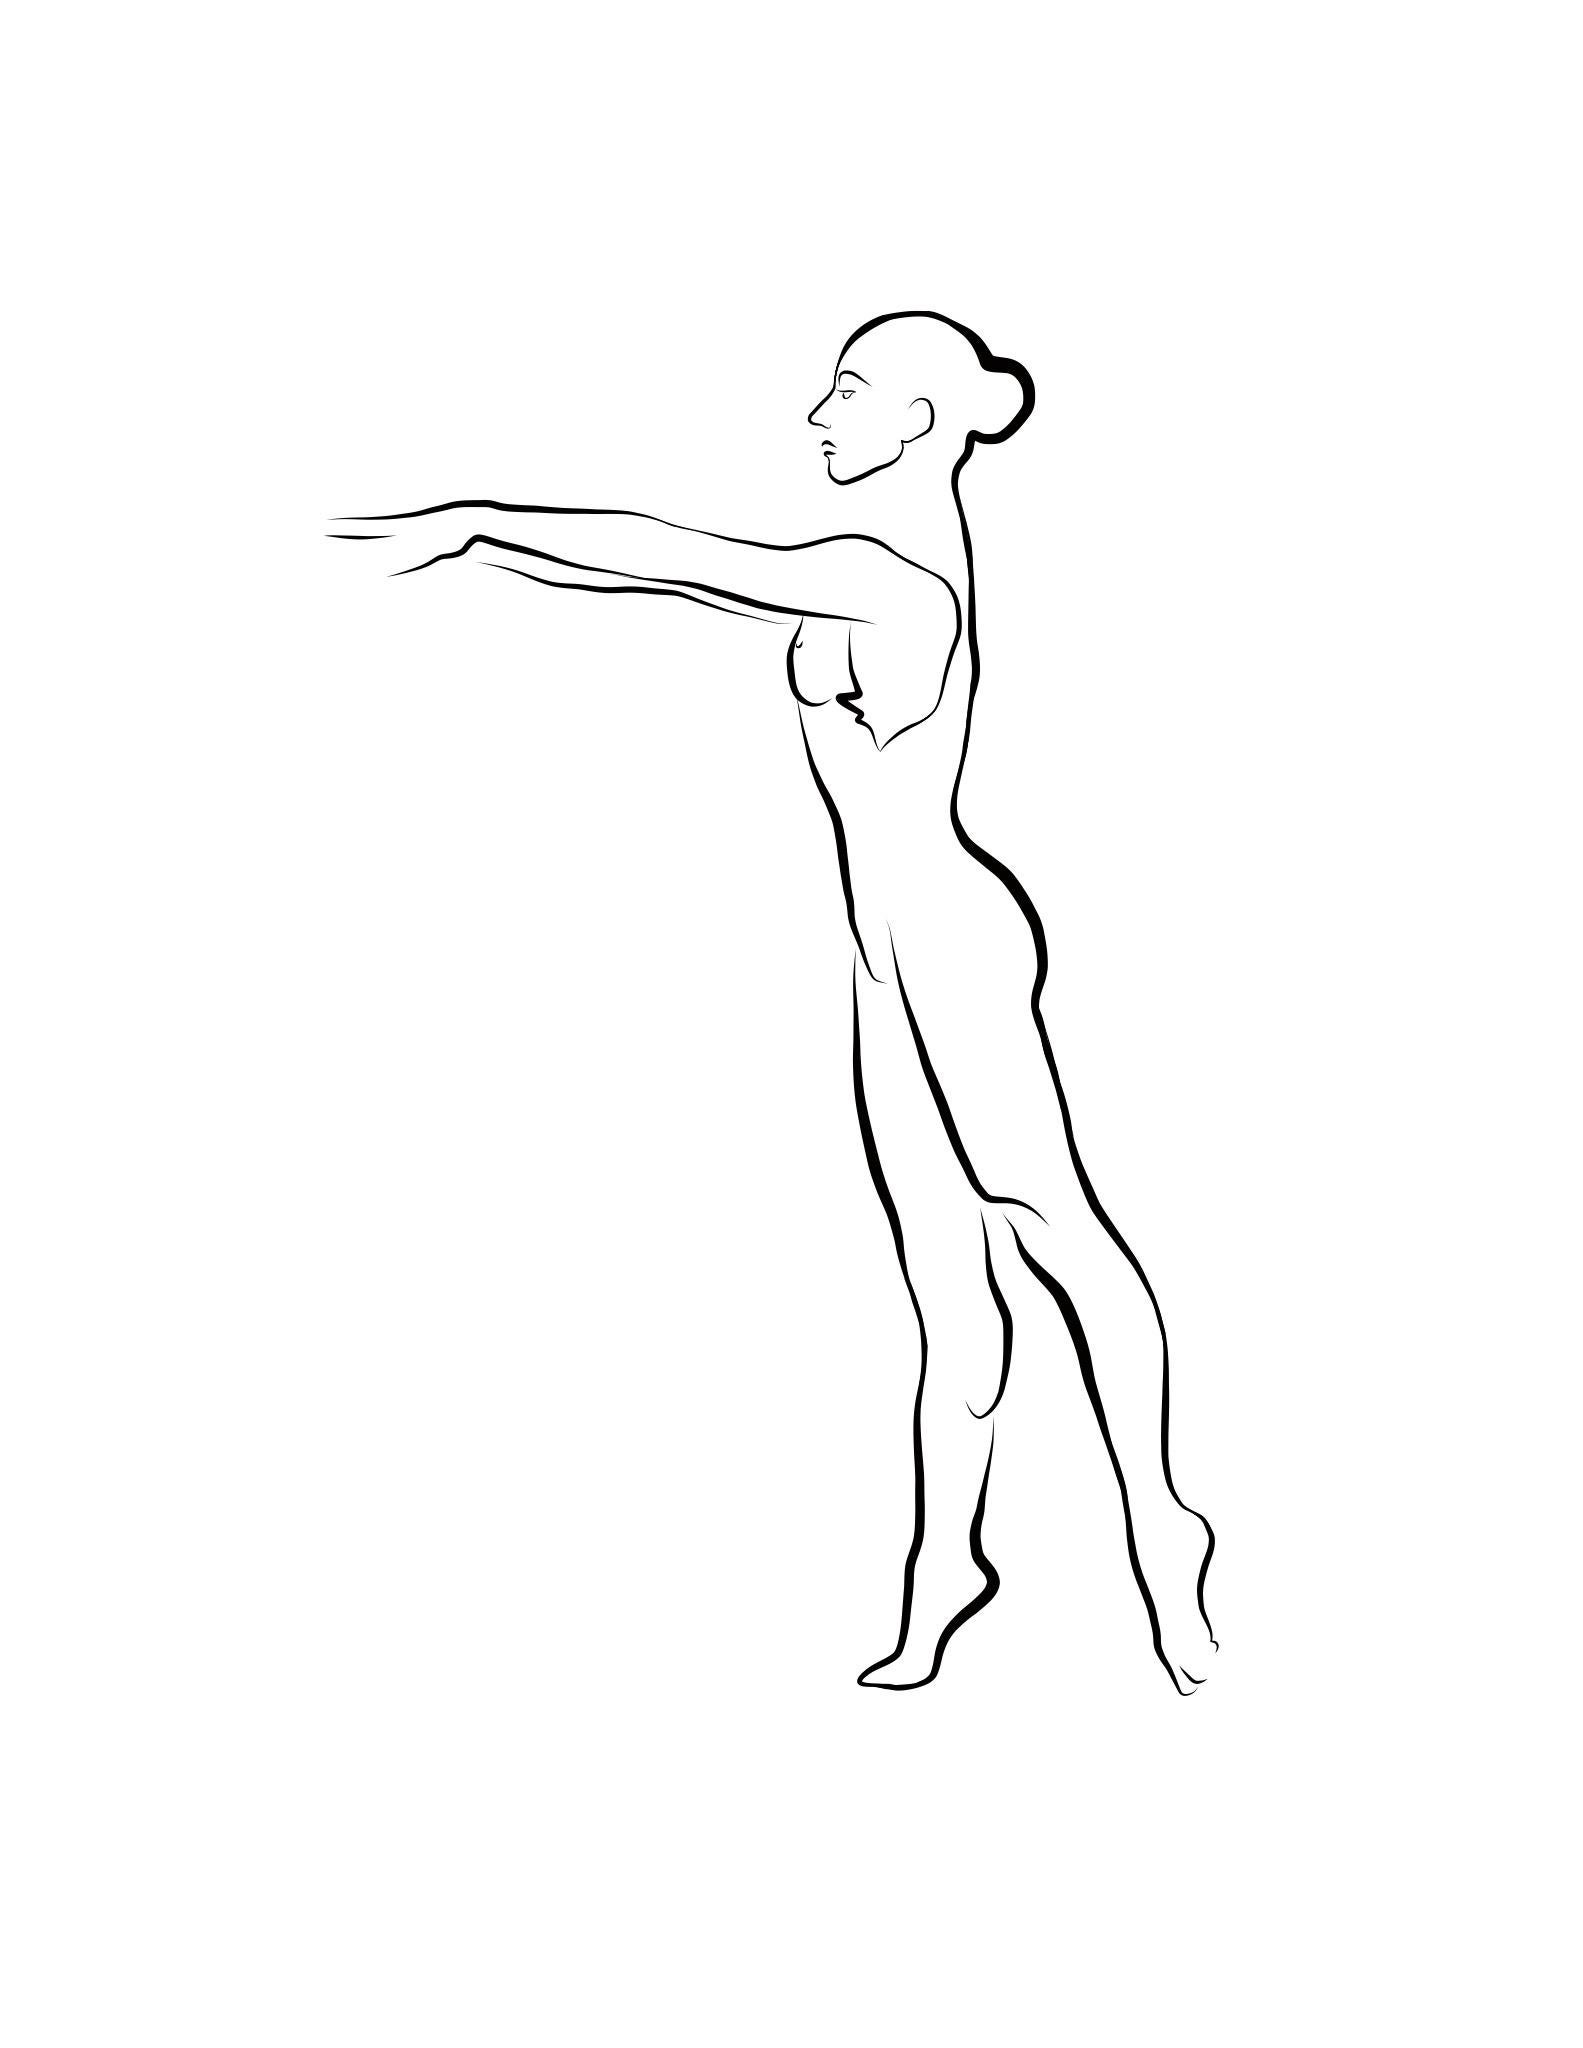 Haiku #61, 1/50 - Digital Vector Drawing B&W Female Nude Standing Tiptoe